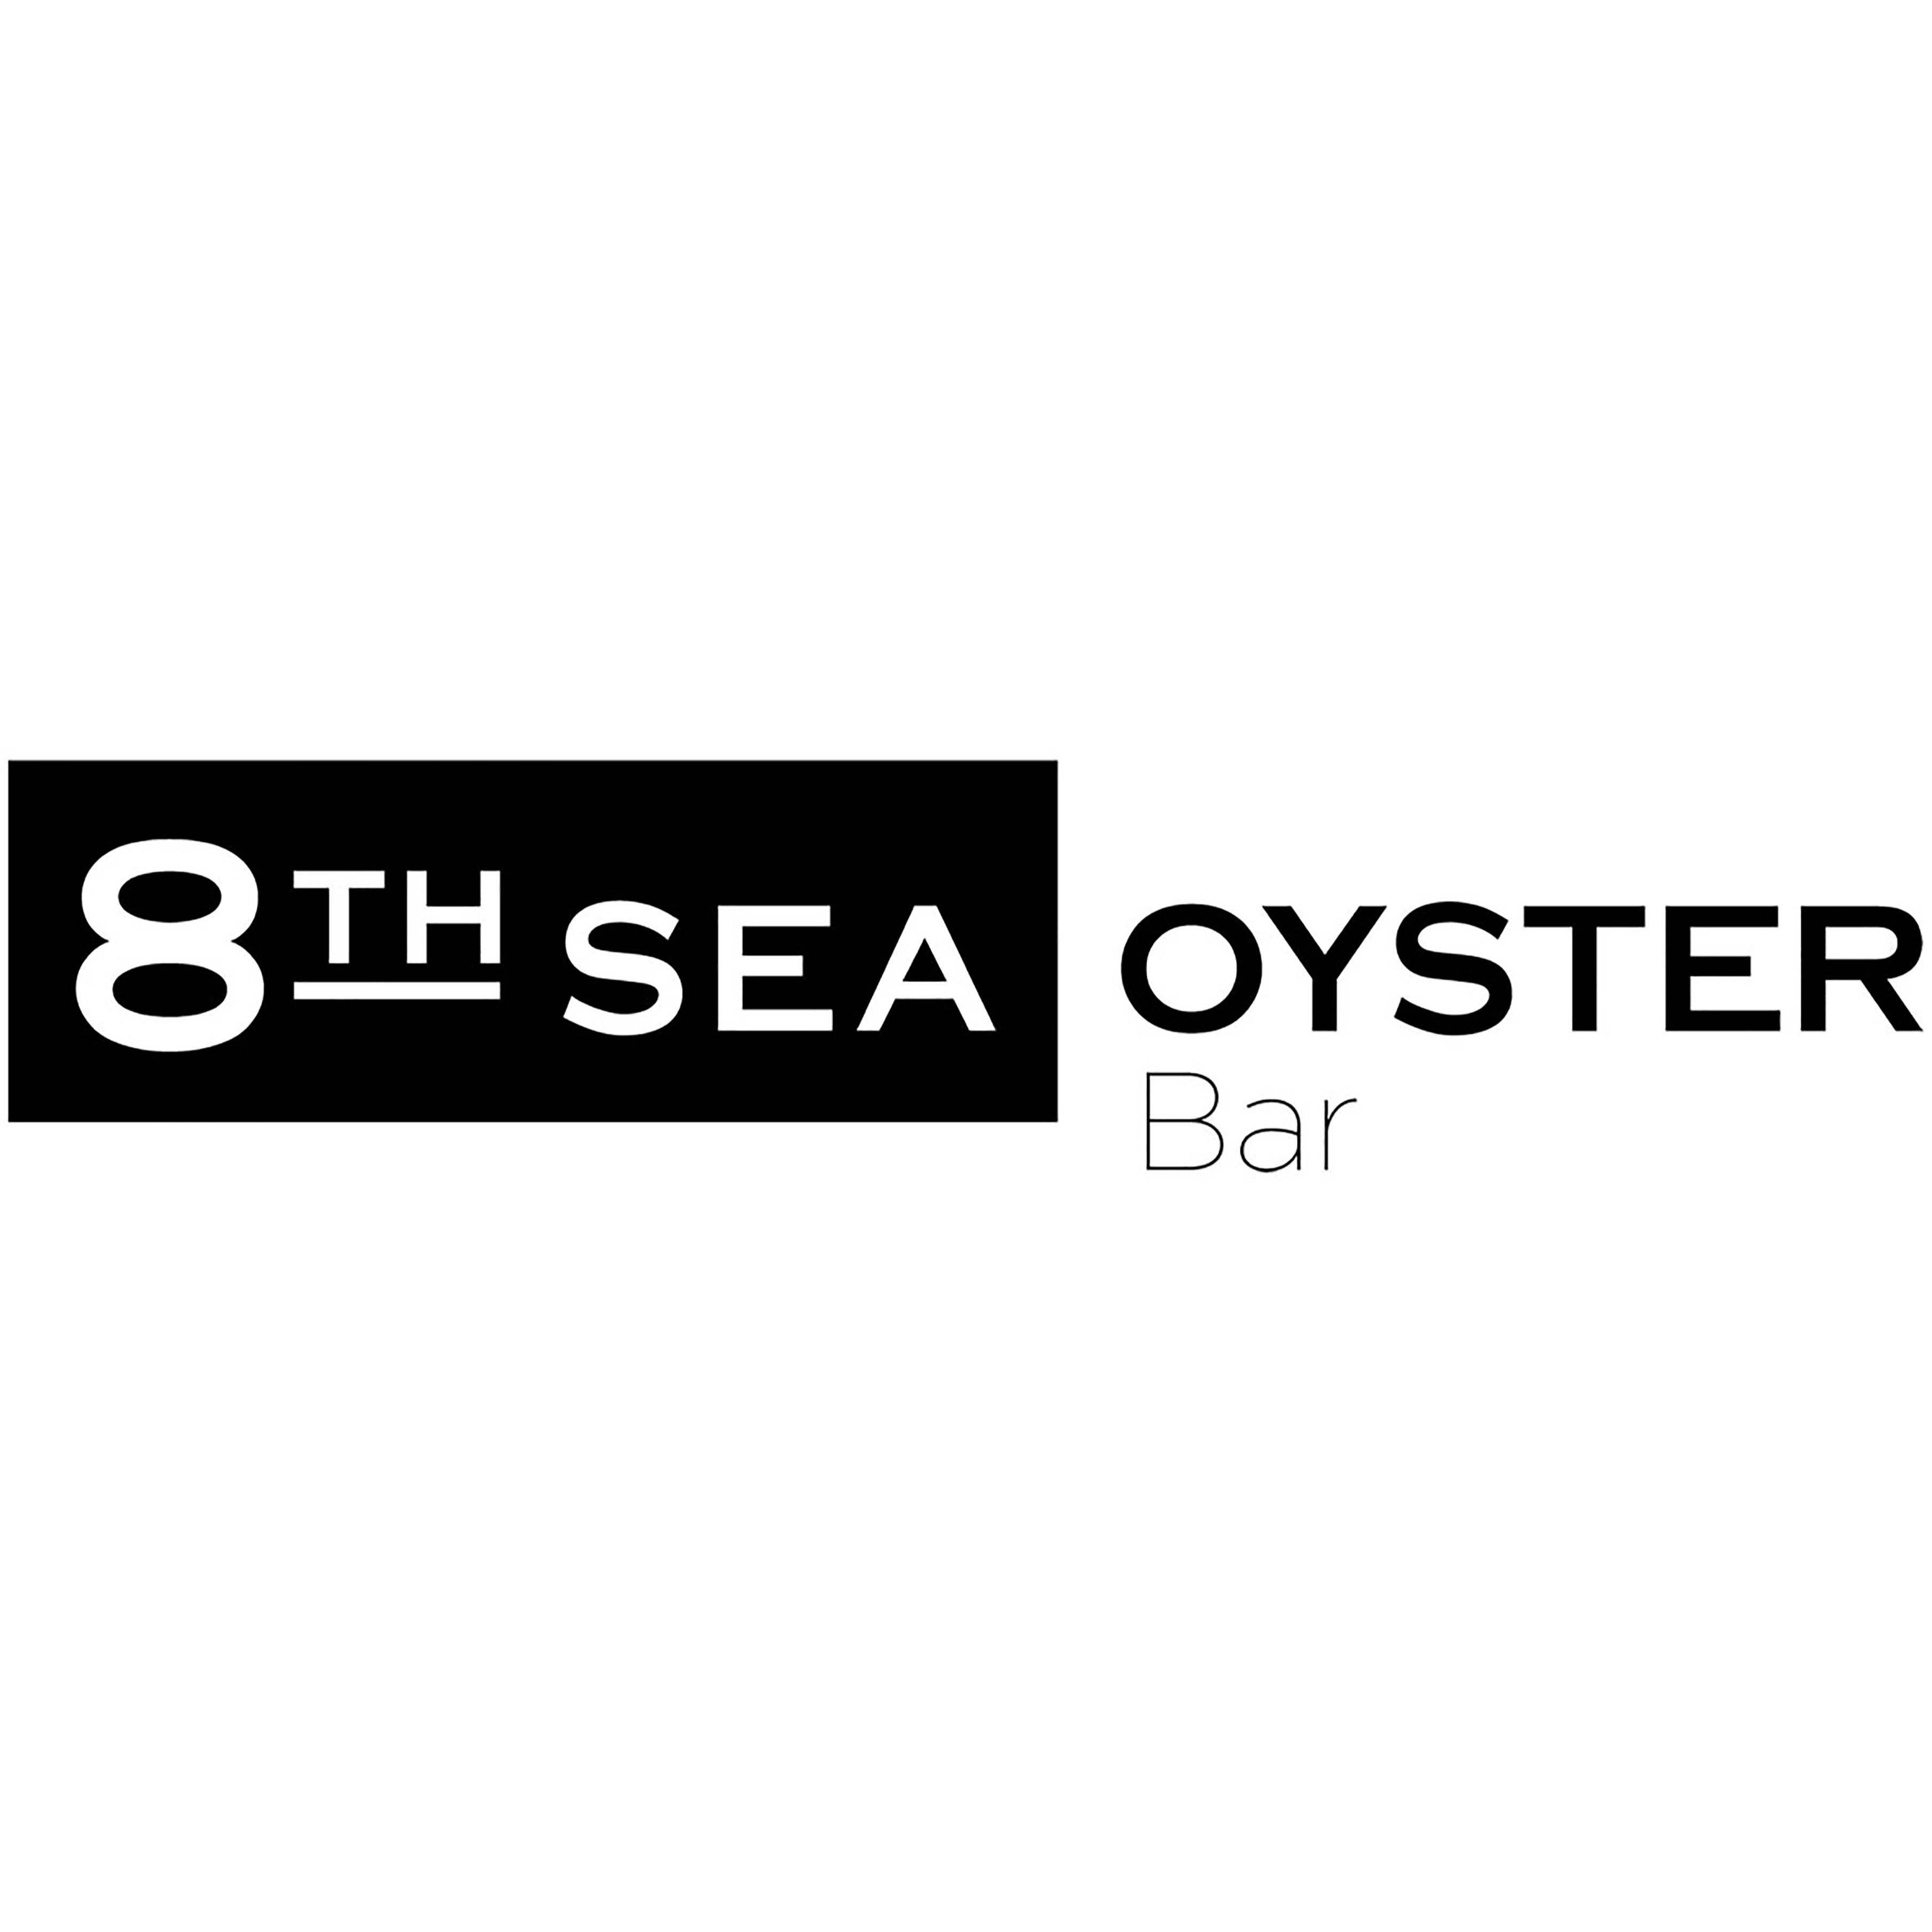 8TH SEA OYSTER Barミント神戸店 - Restaurant - 神戸市 - 078-291-5163 Japan | ShowMeLocal.com